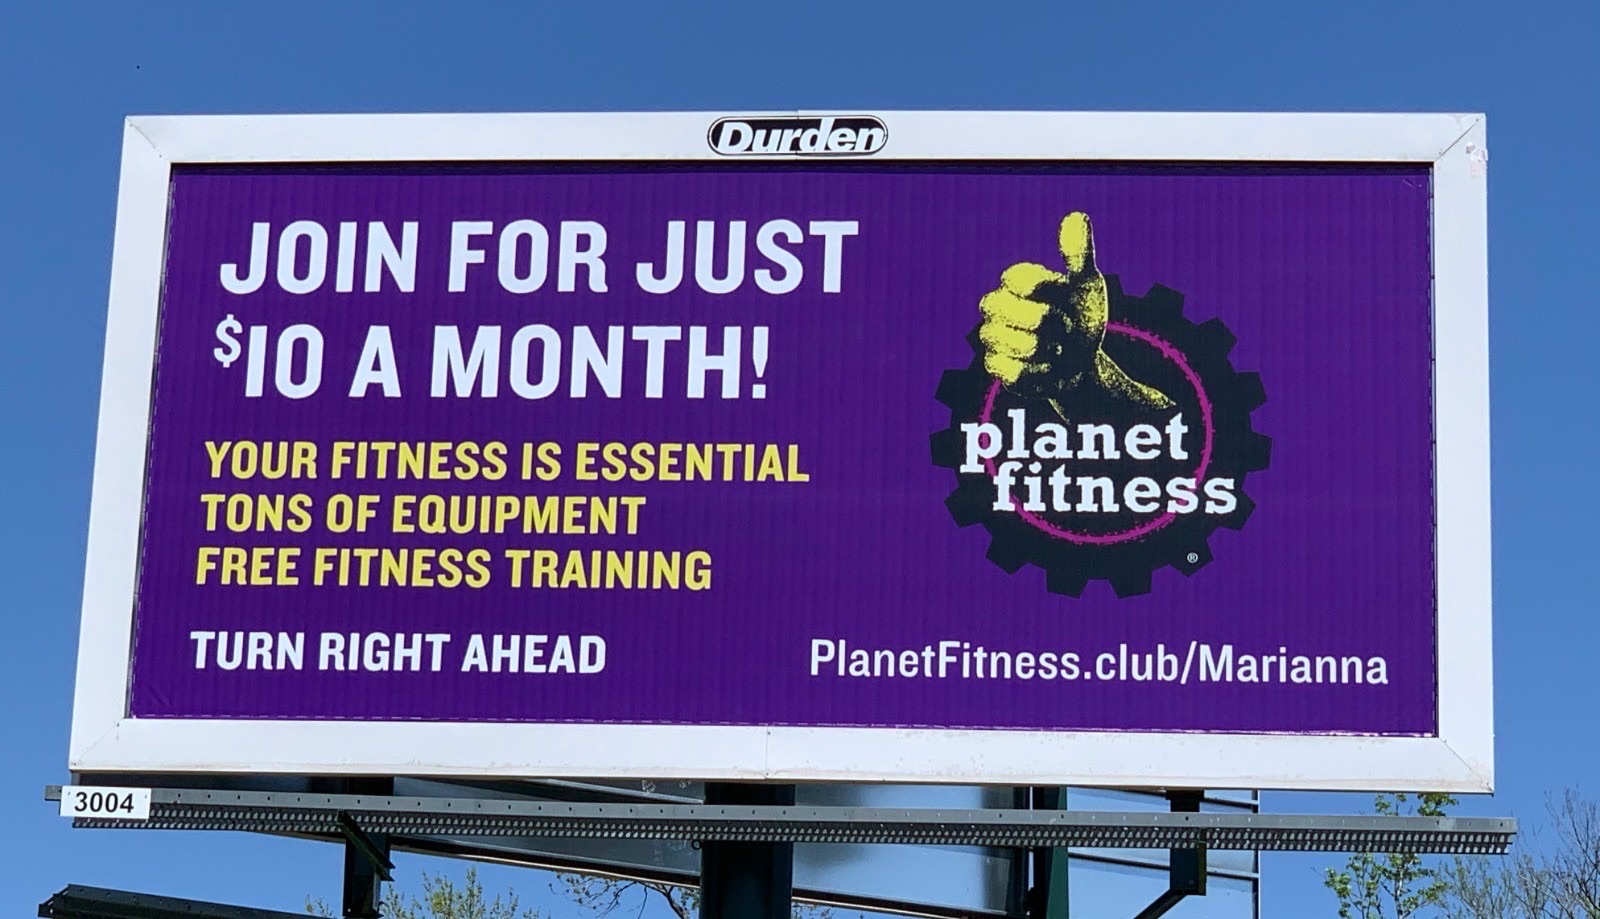 Durden-sign-conversion-planet-fitness-marianna-billboard-insider